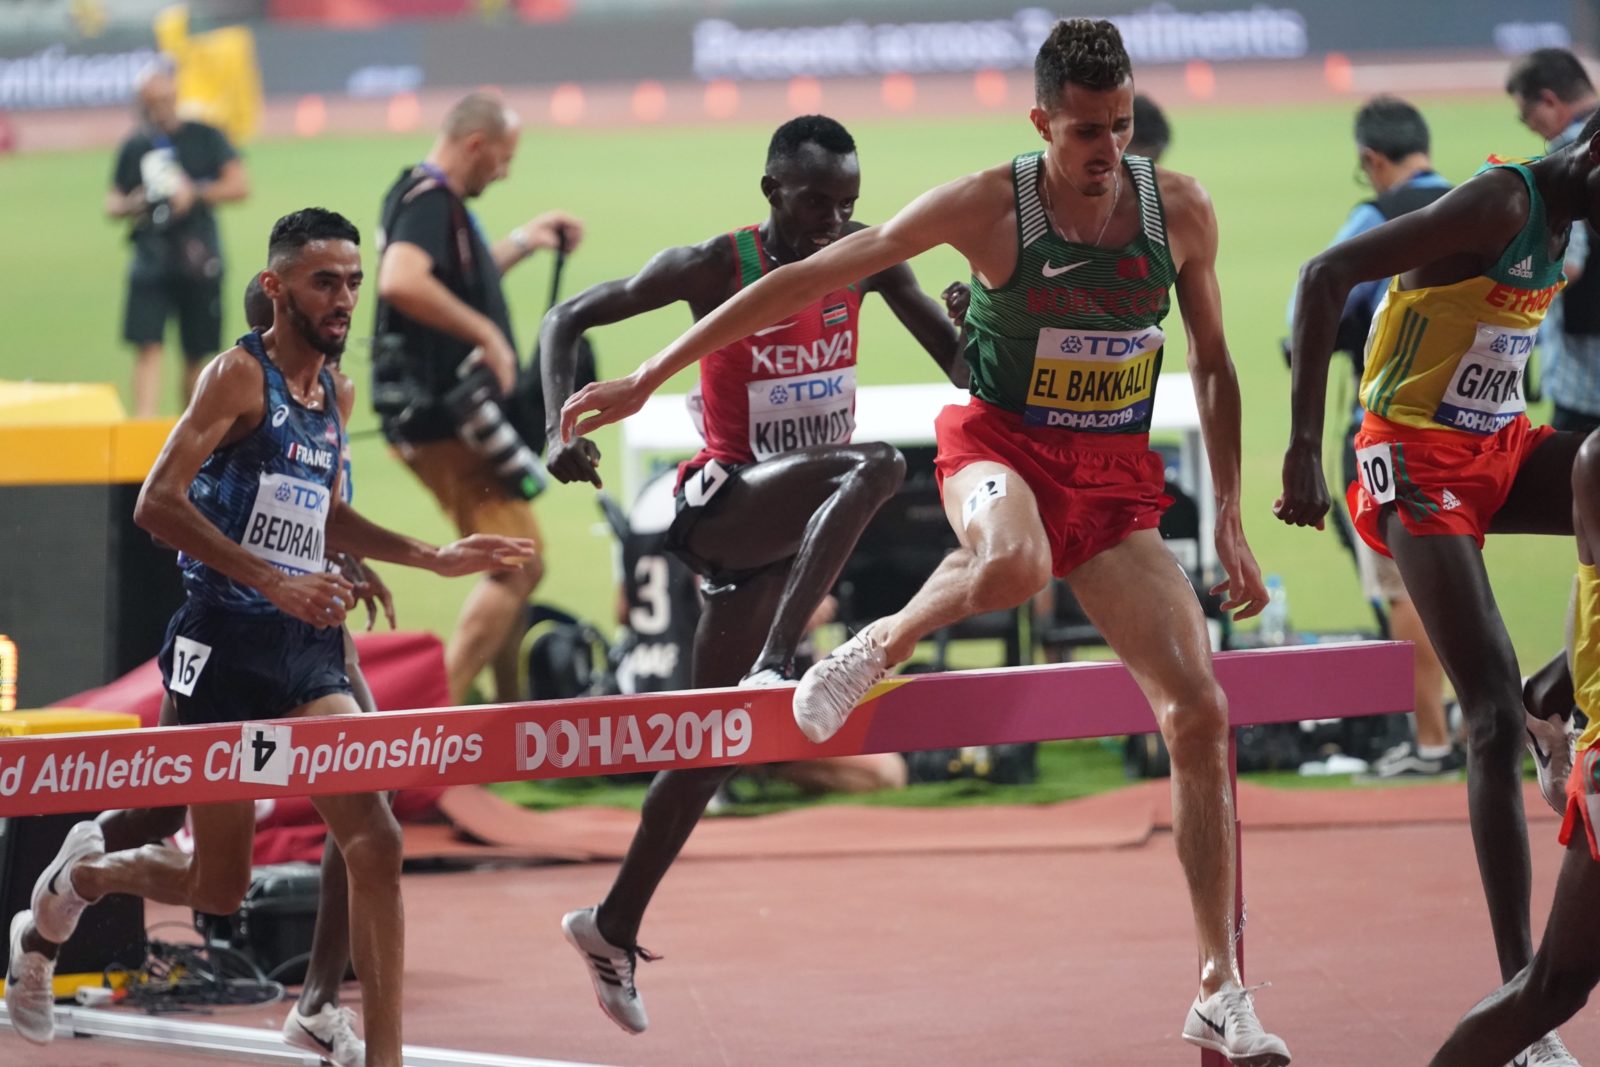 Men’s steeplechase final doha 2019